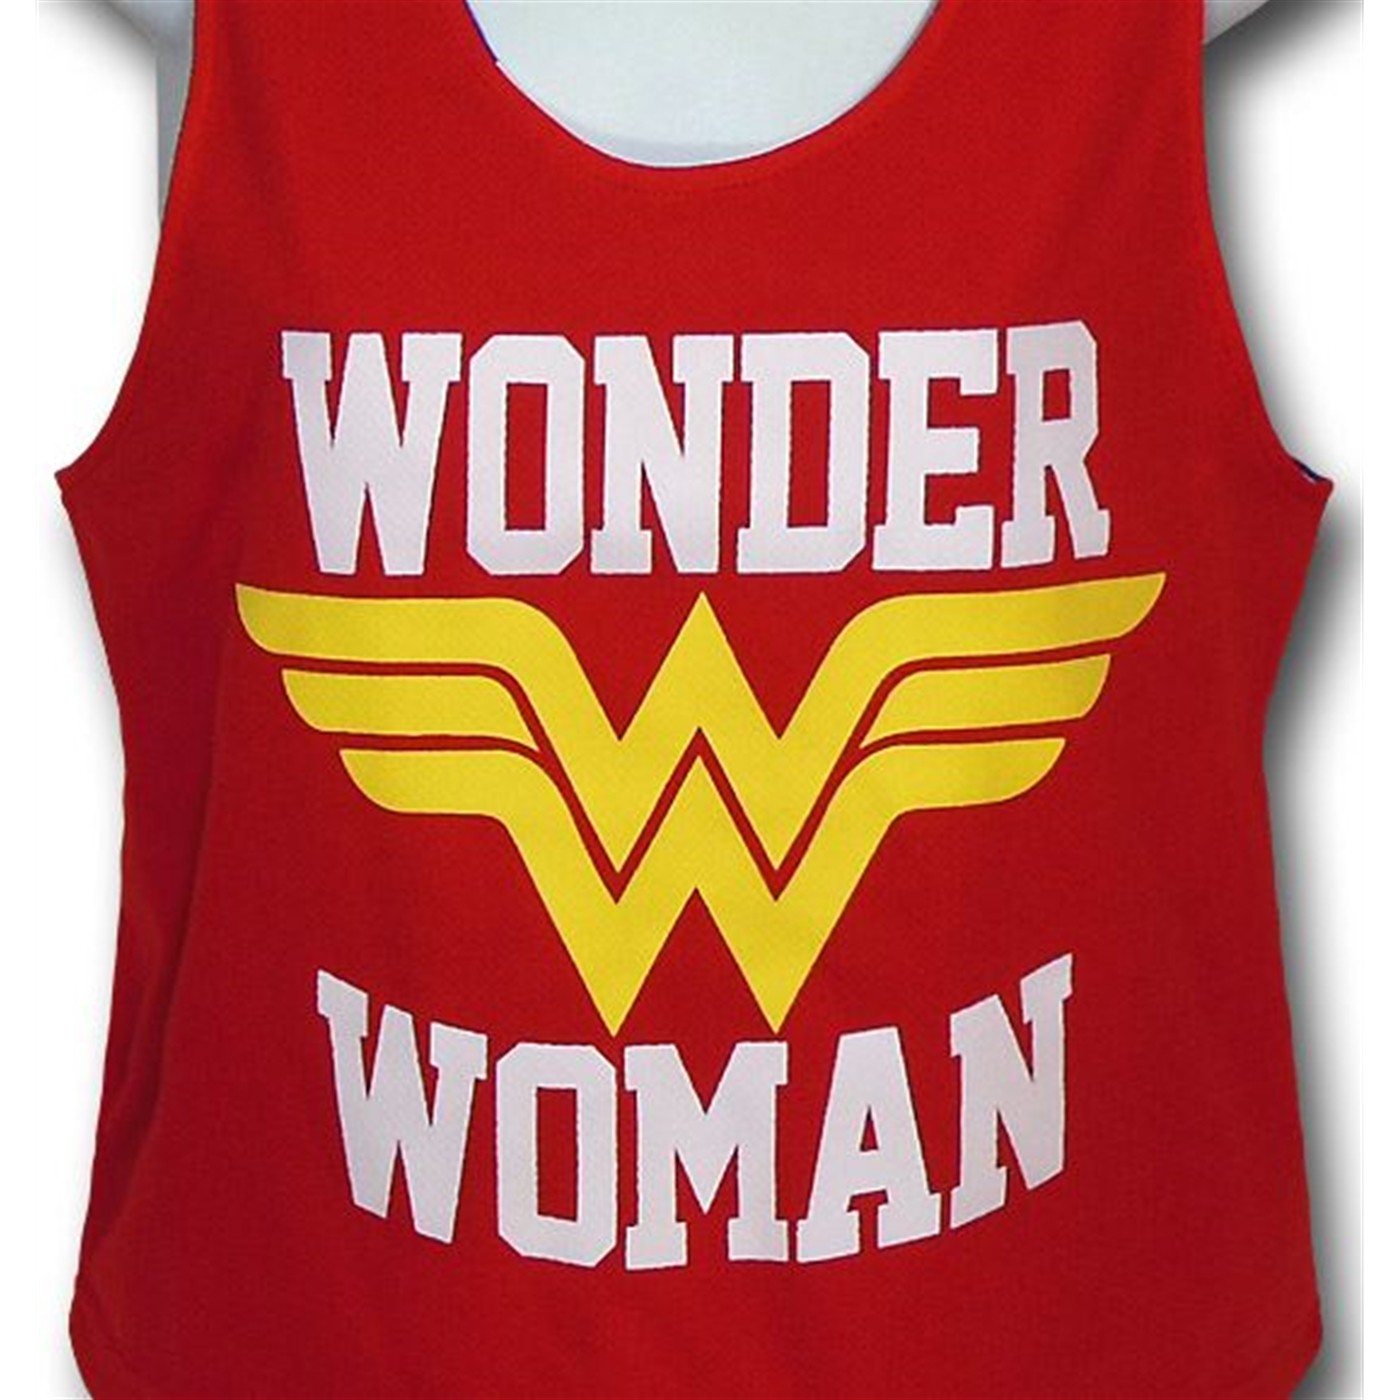 Wonder Woman Women's Reversible Mesh Tank Top